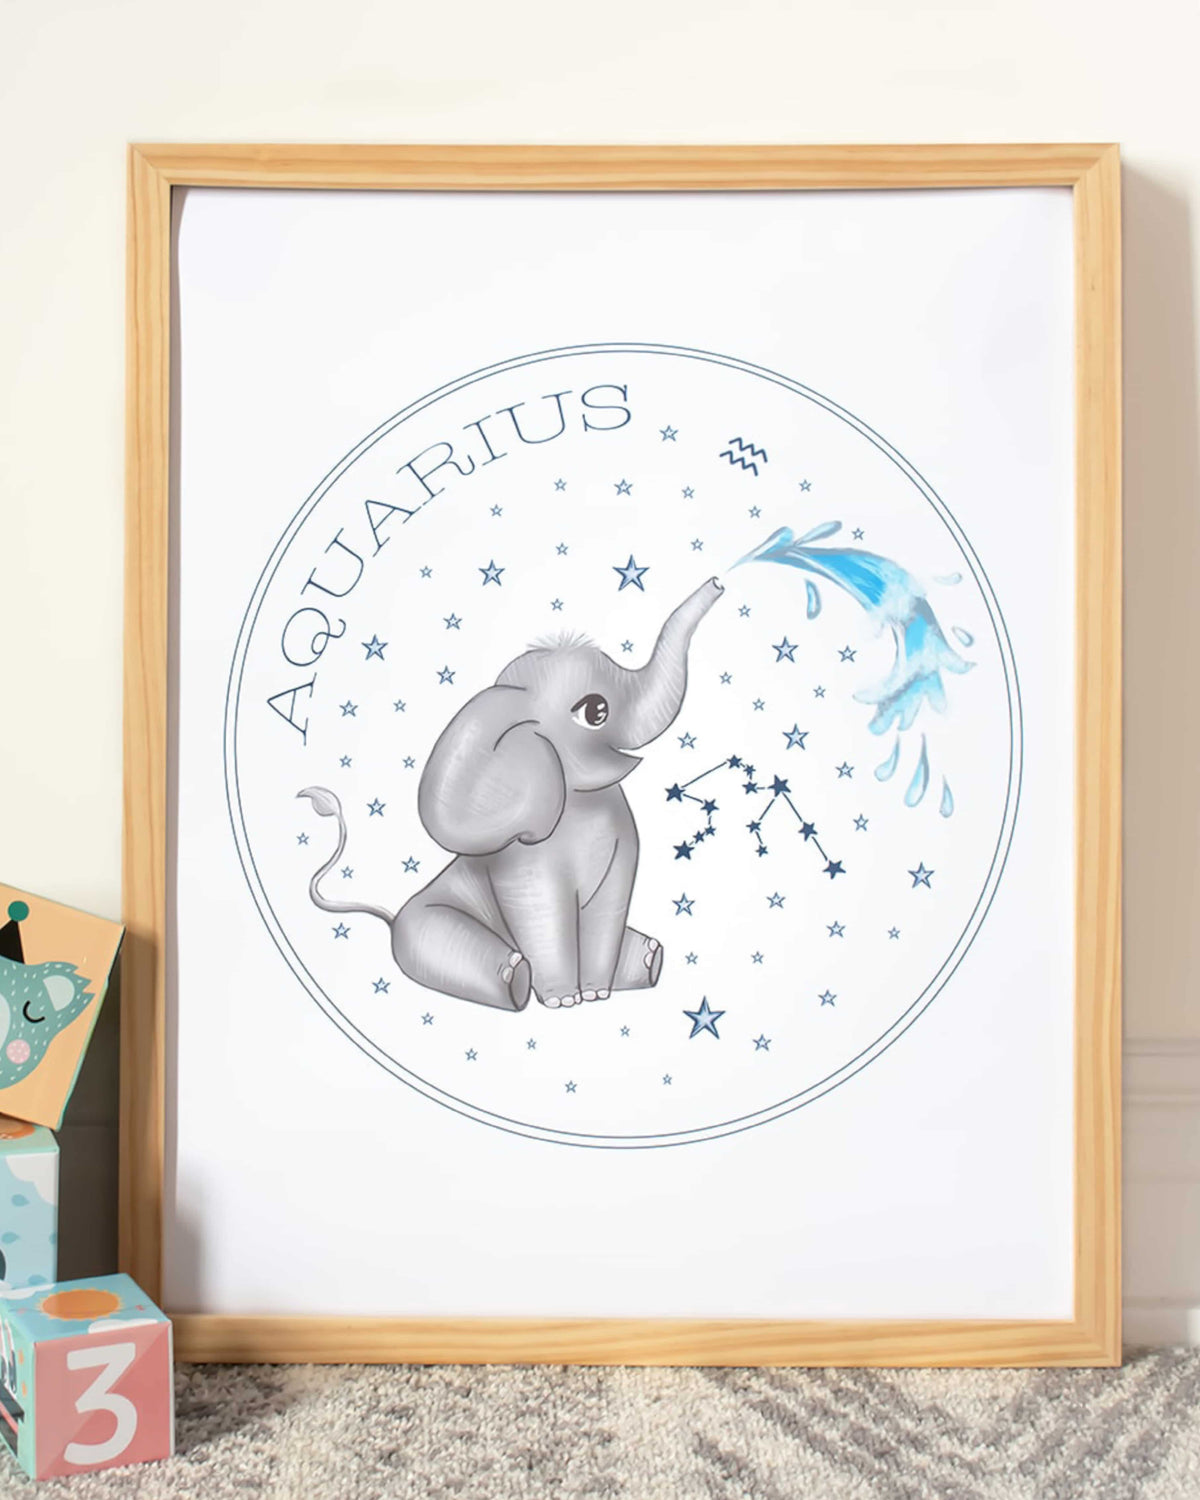 Framed hand drawn stars zodiac nursery decor wall art poster Aquarius cute baby elephant with water 